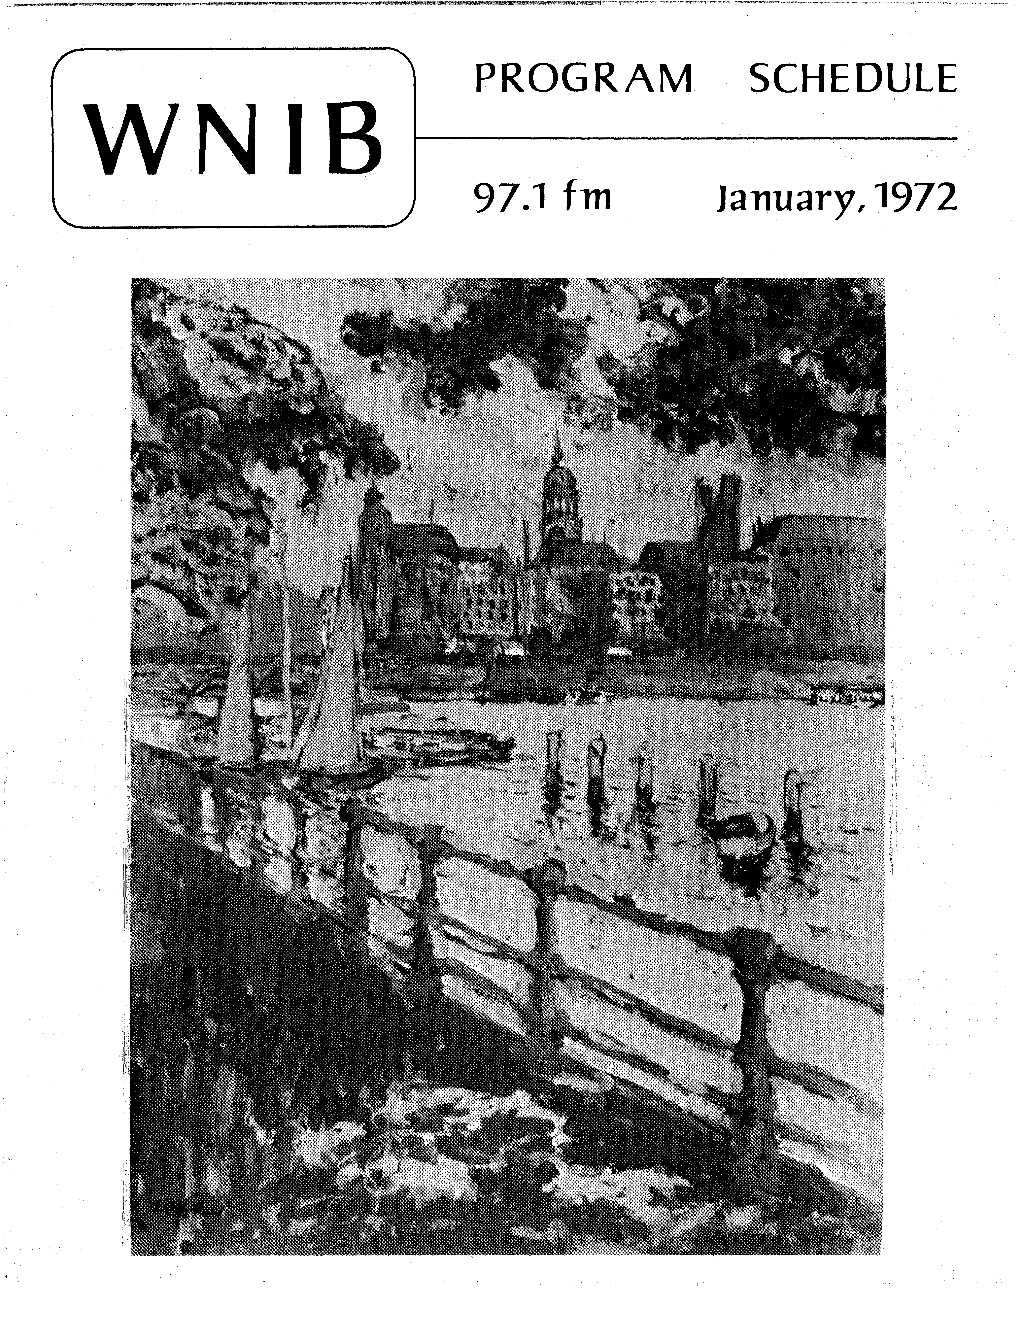 WNIB Program Schedule January 1972